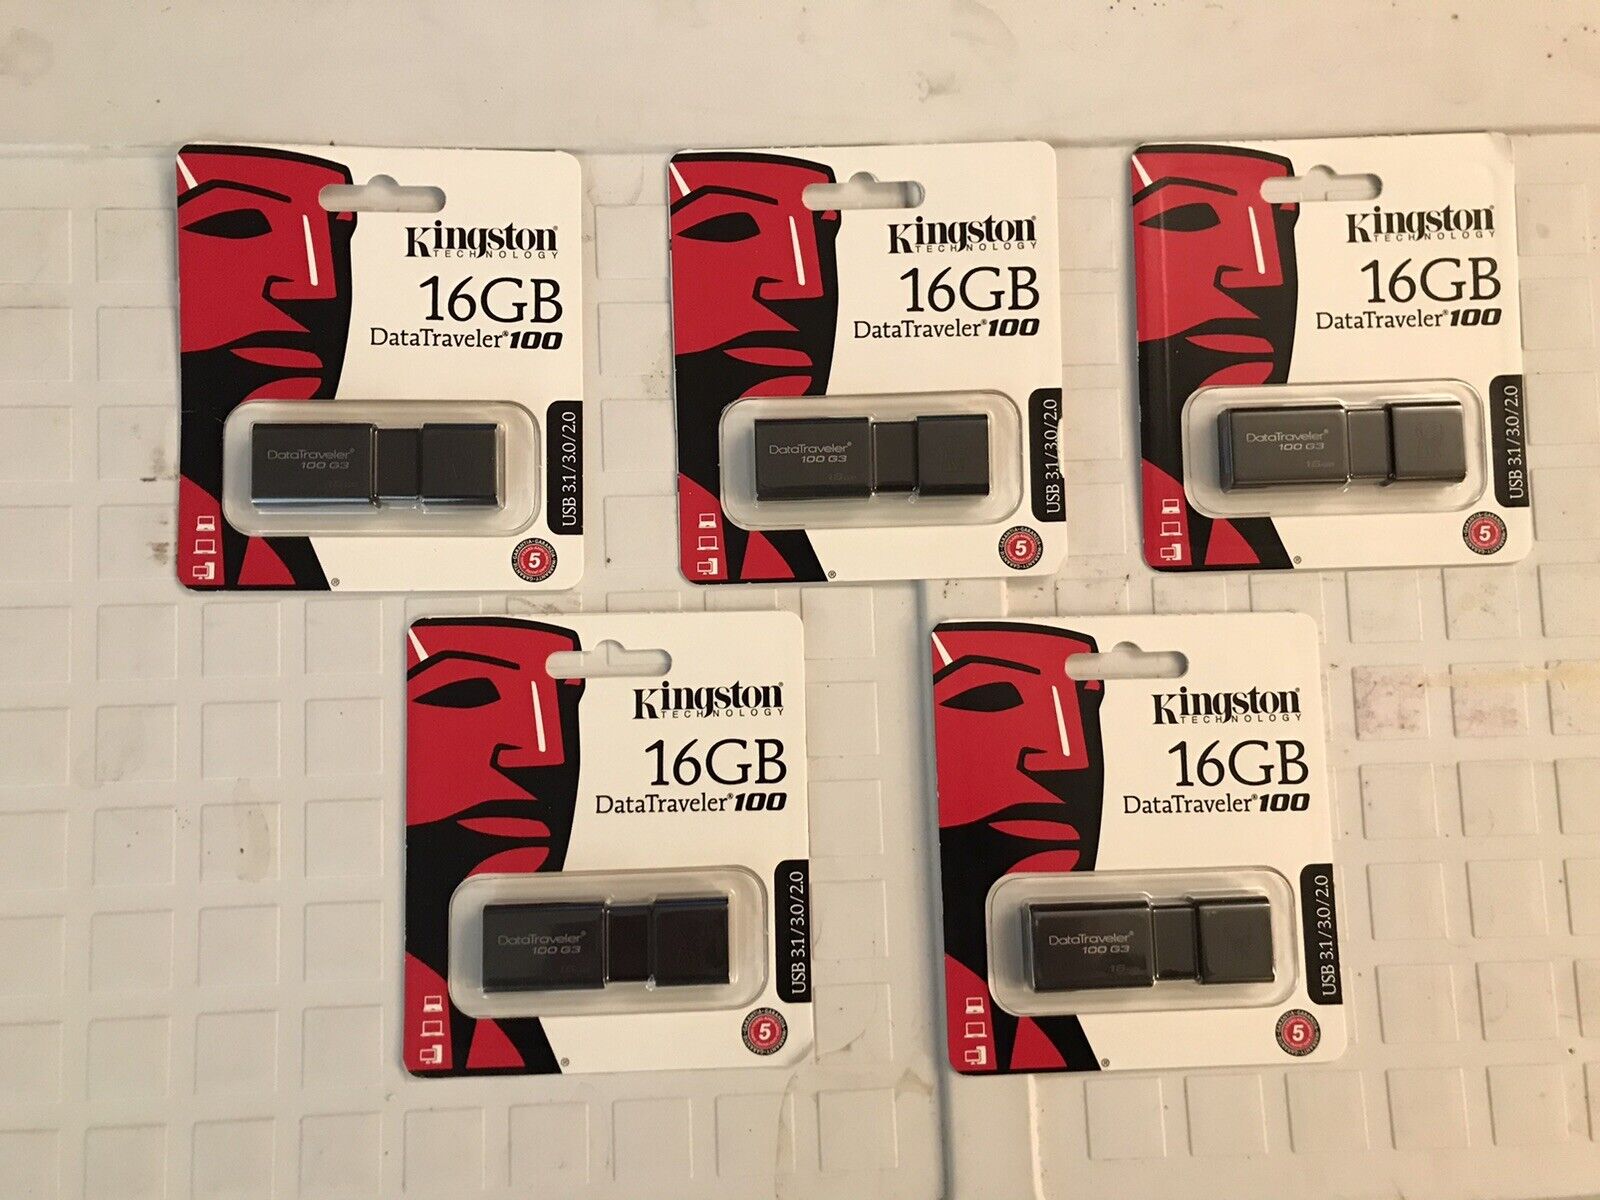 Kingston DTIG4 16GB Data Traveler 100 USB Memory Flash Drive Lot of 5 Thumb 80GB